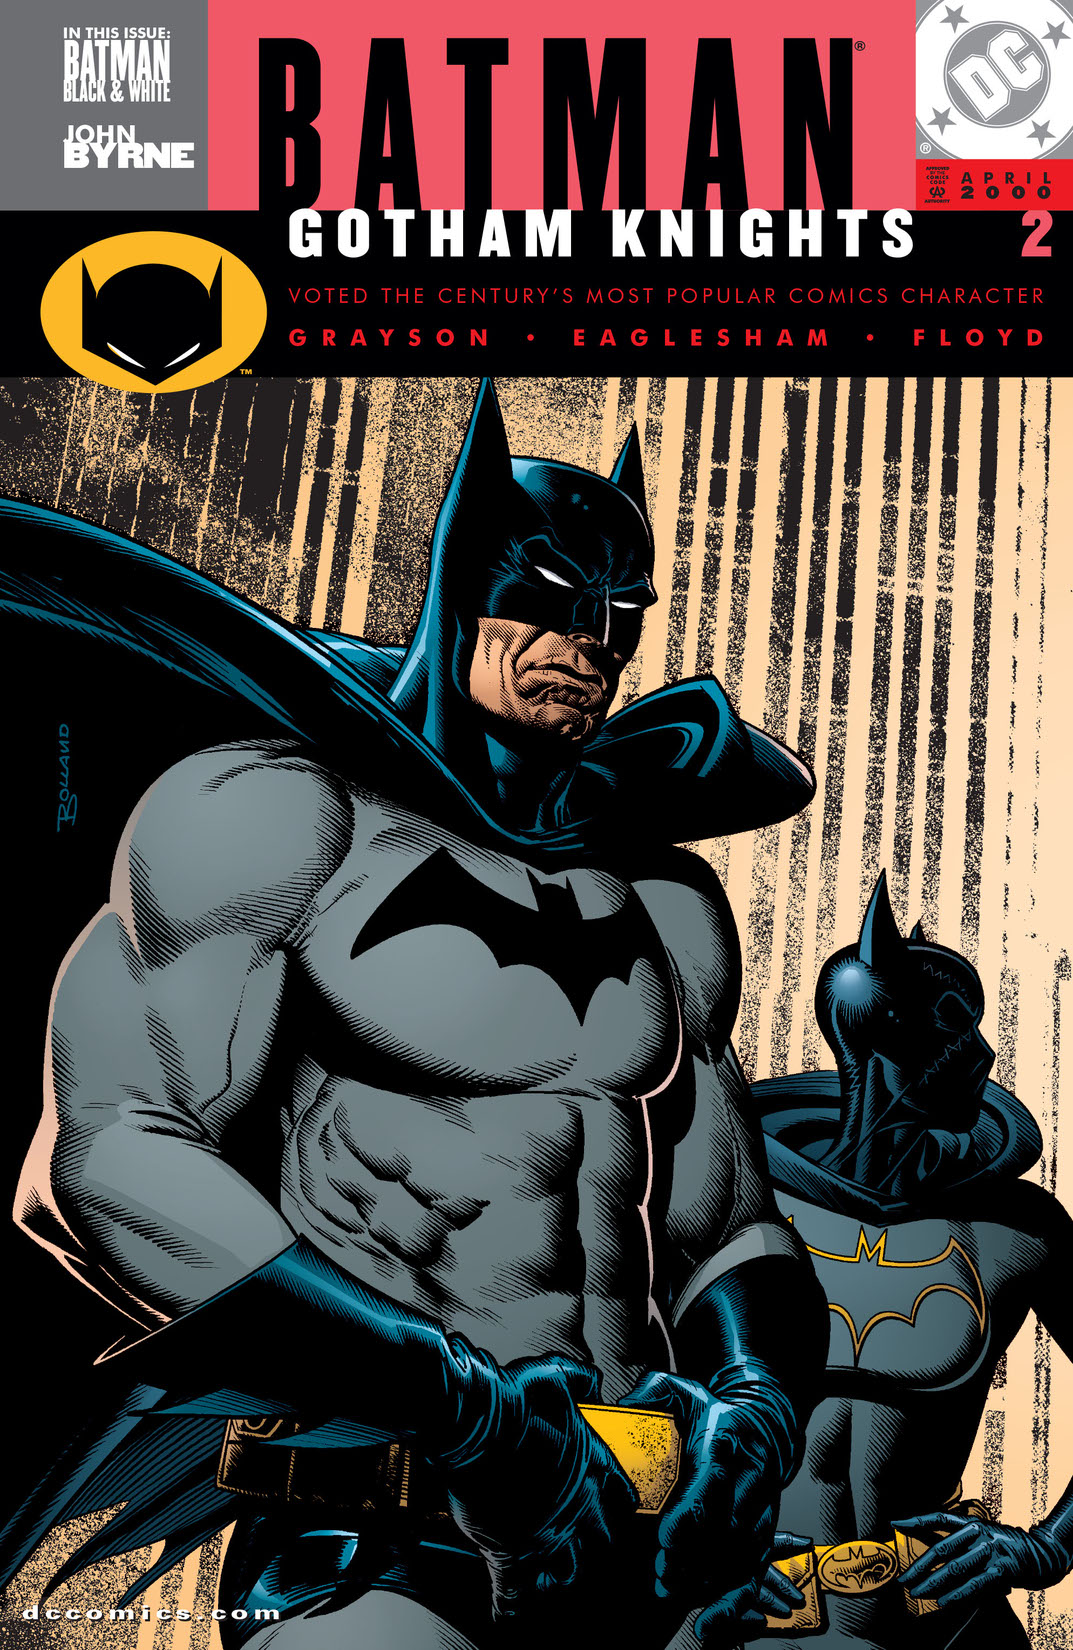 Batman: Gotham Knights #2 preview images